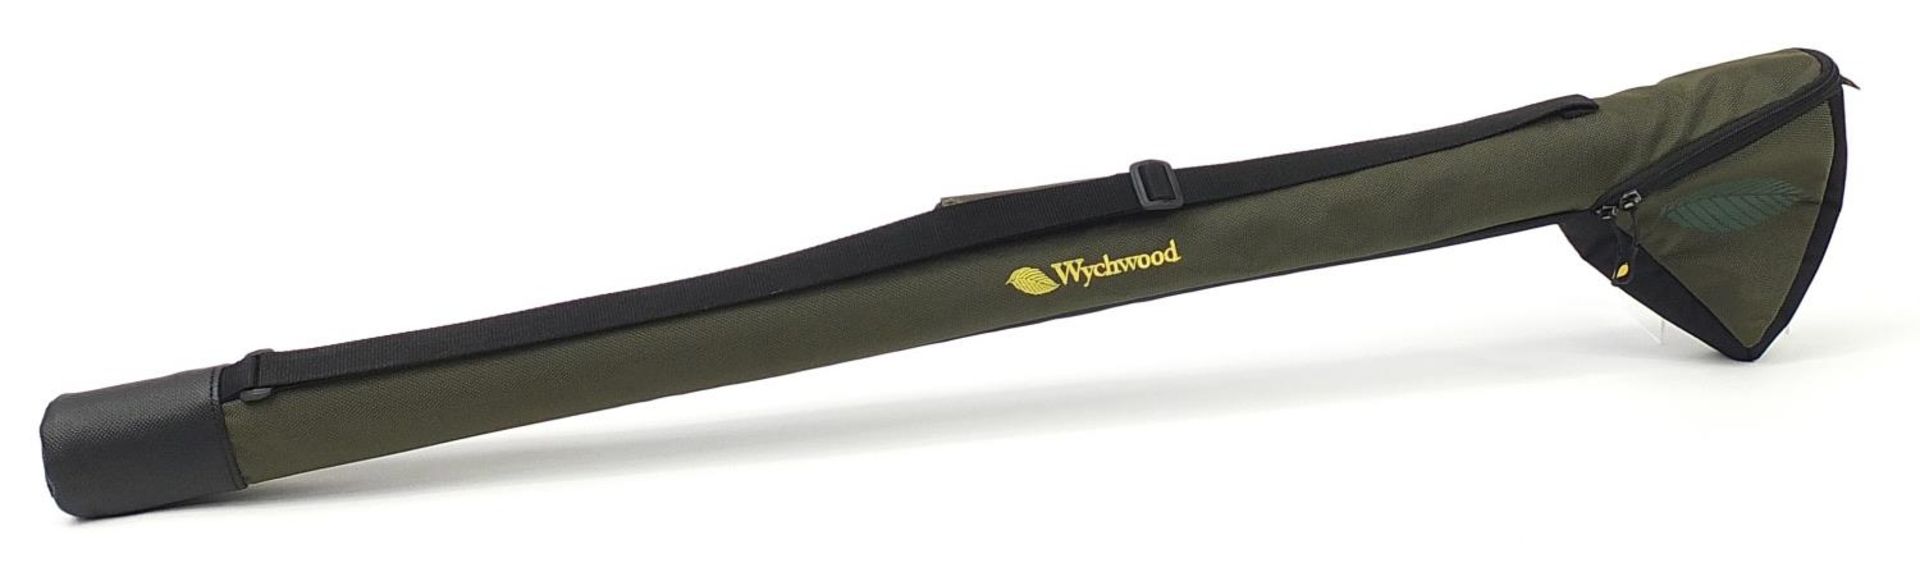 Wychwood match fishing rod case, 103cm in length